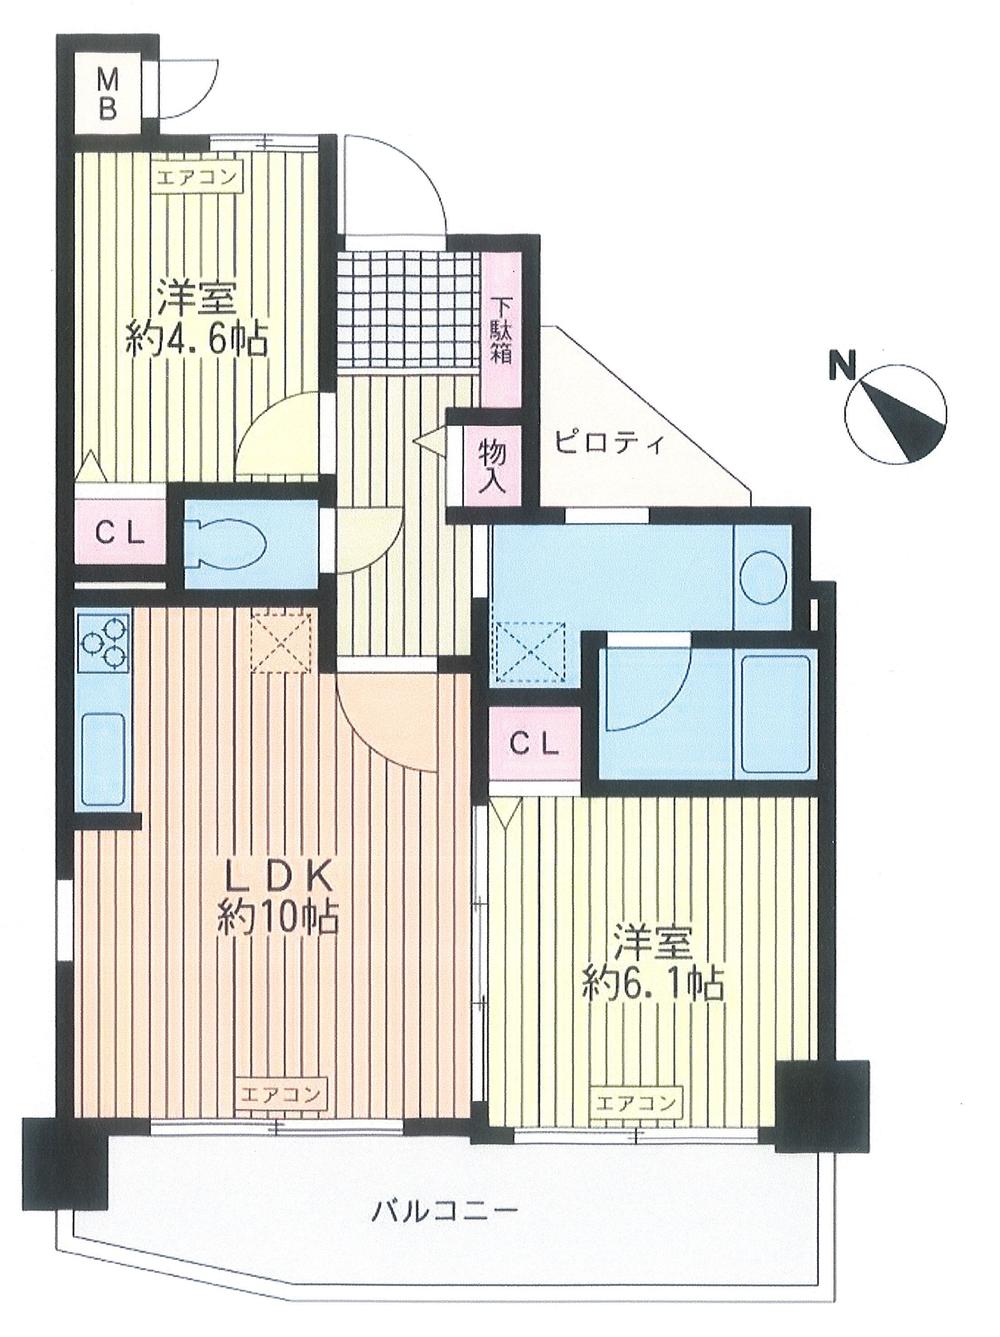 Floor plan. 2LDK, Price 25,800,000 yen, Occupied area 47.95 sq m , Balcony area 10.23 sq m